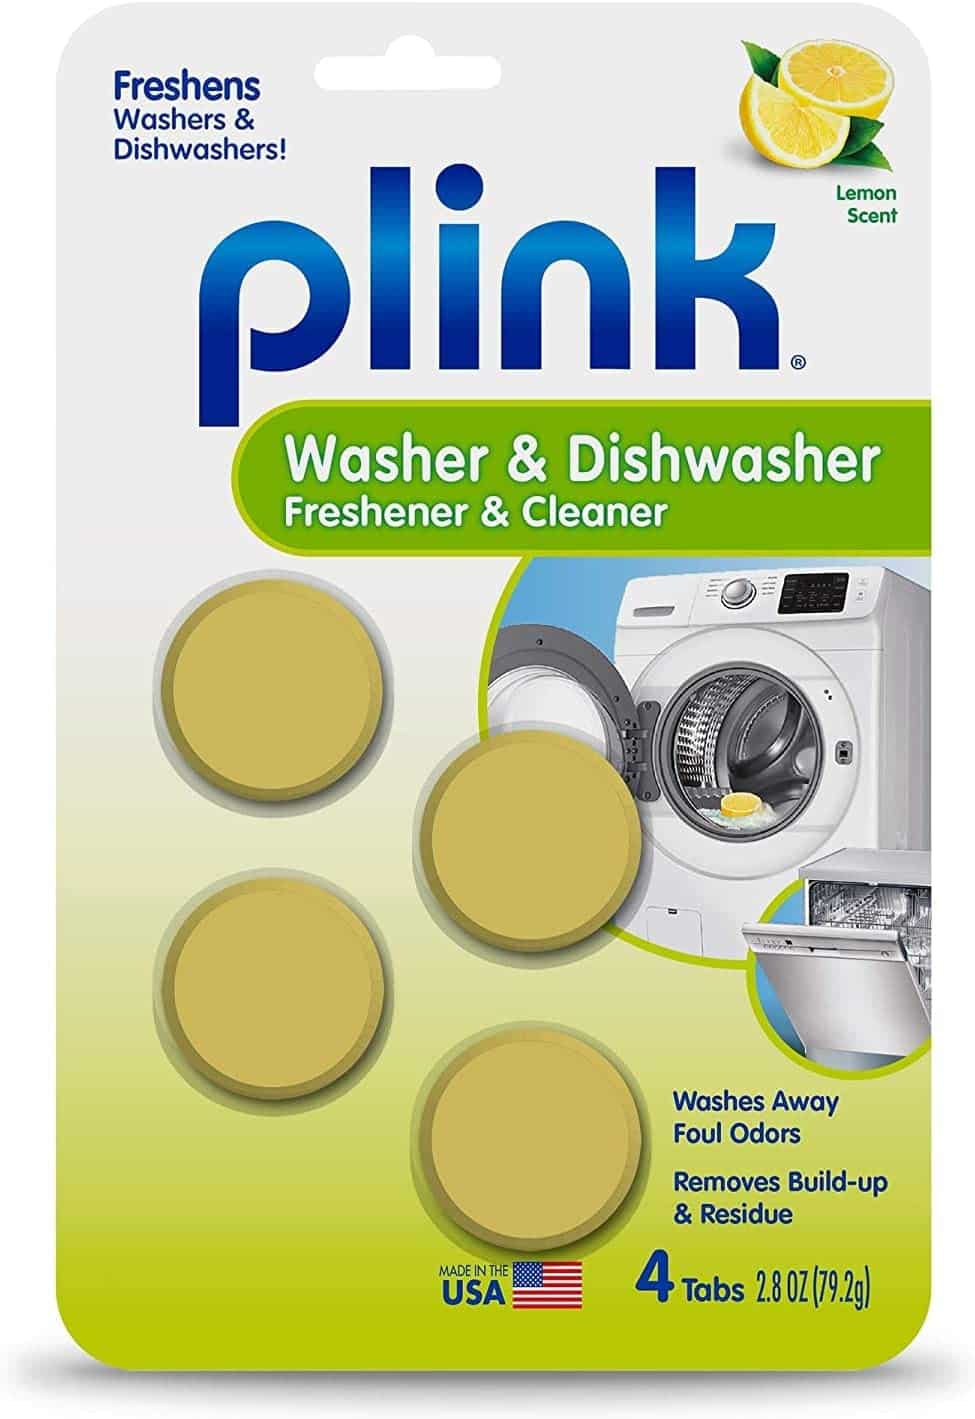 Plink Washer and Dishwasher Freshener Cleaner Logo